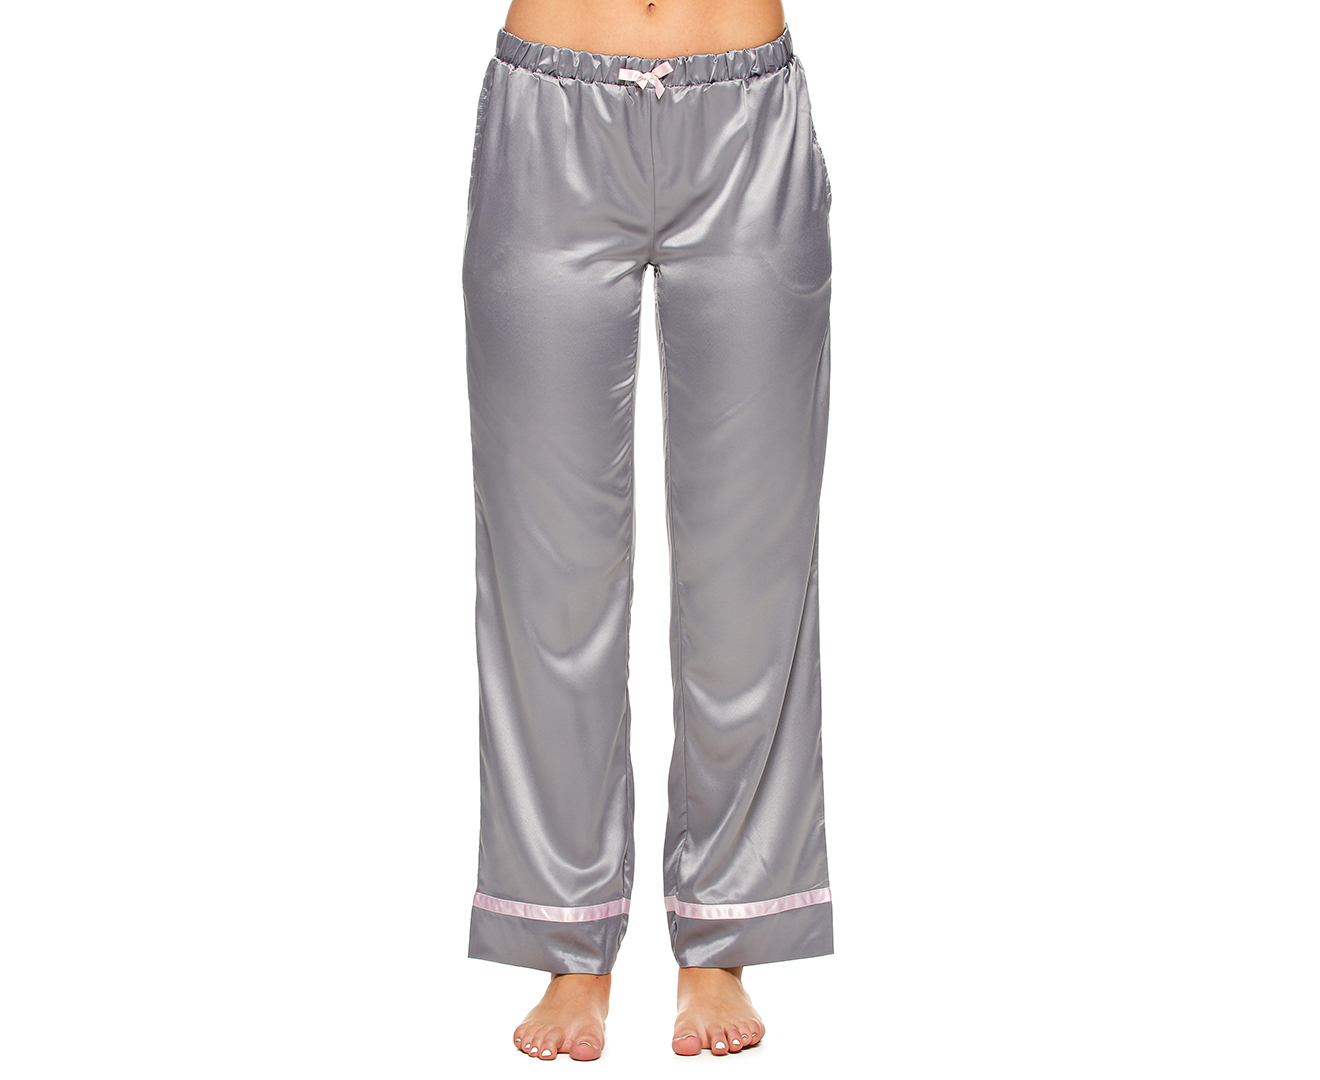 Nanette Lepore Women's Satin Long Sleepwear Set - Dark Grey